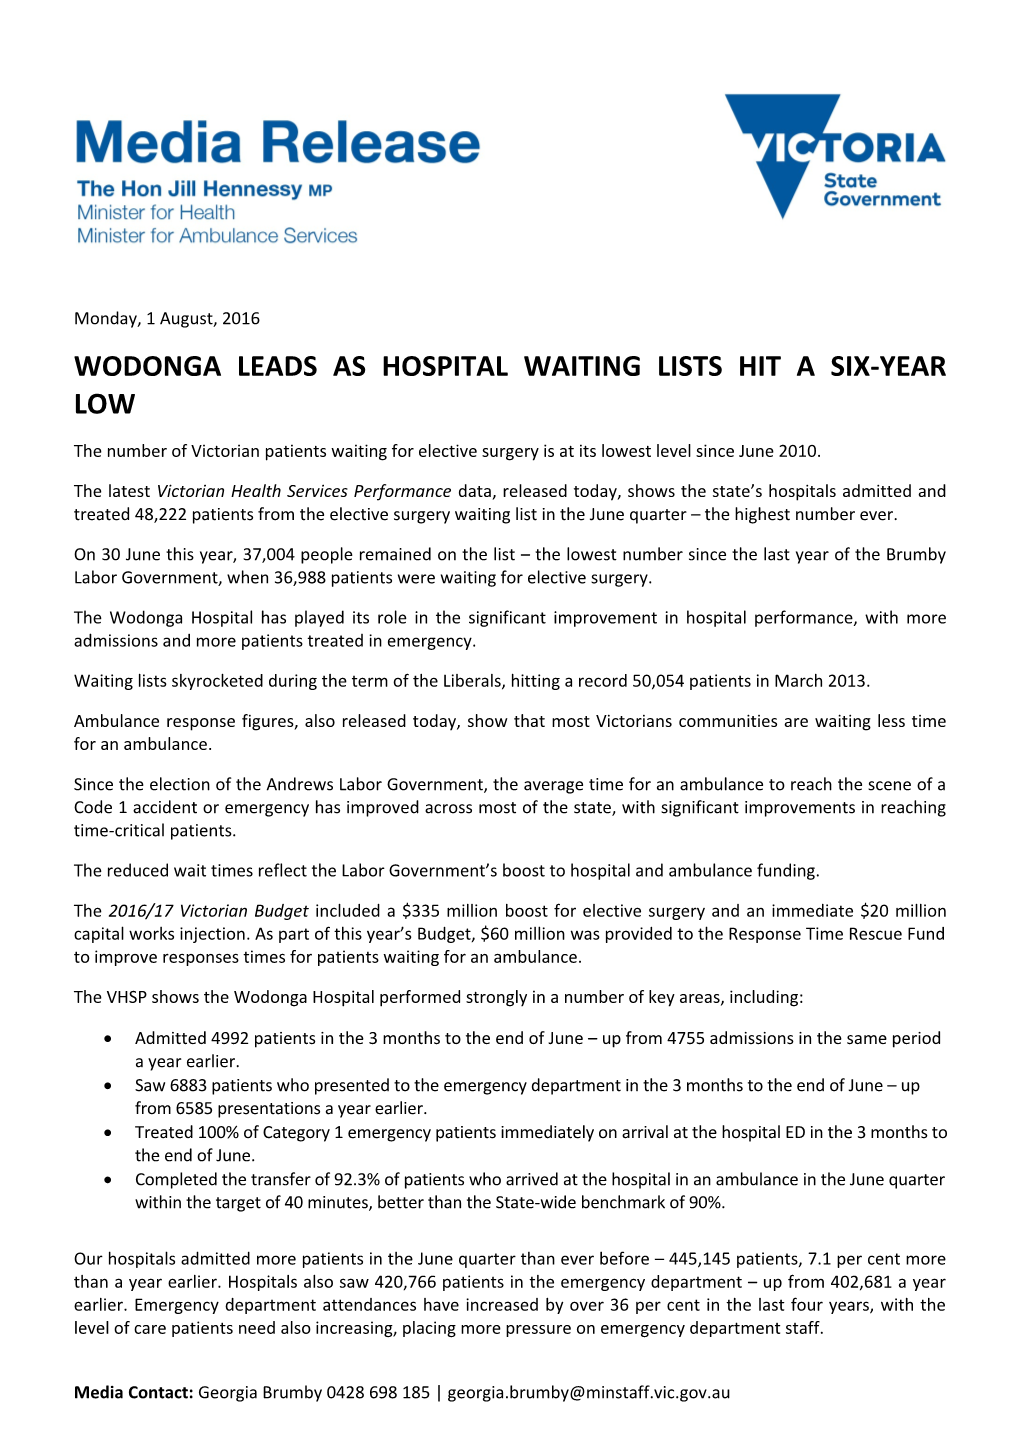 Wodonga Leads As Hospital Waiting Lists Hit a Six-Year Low